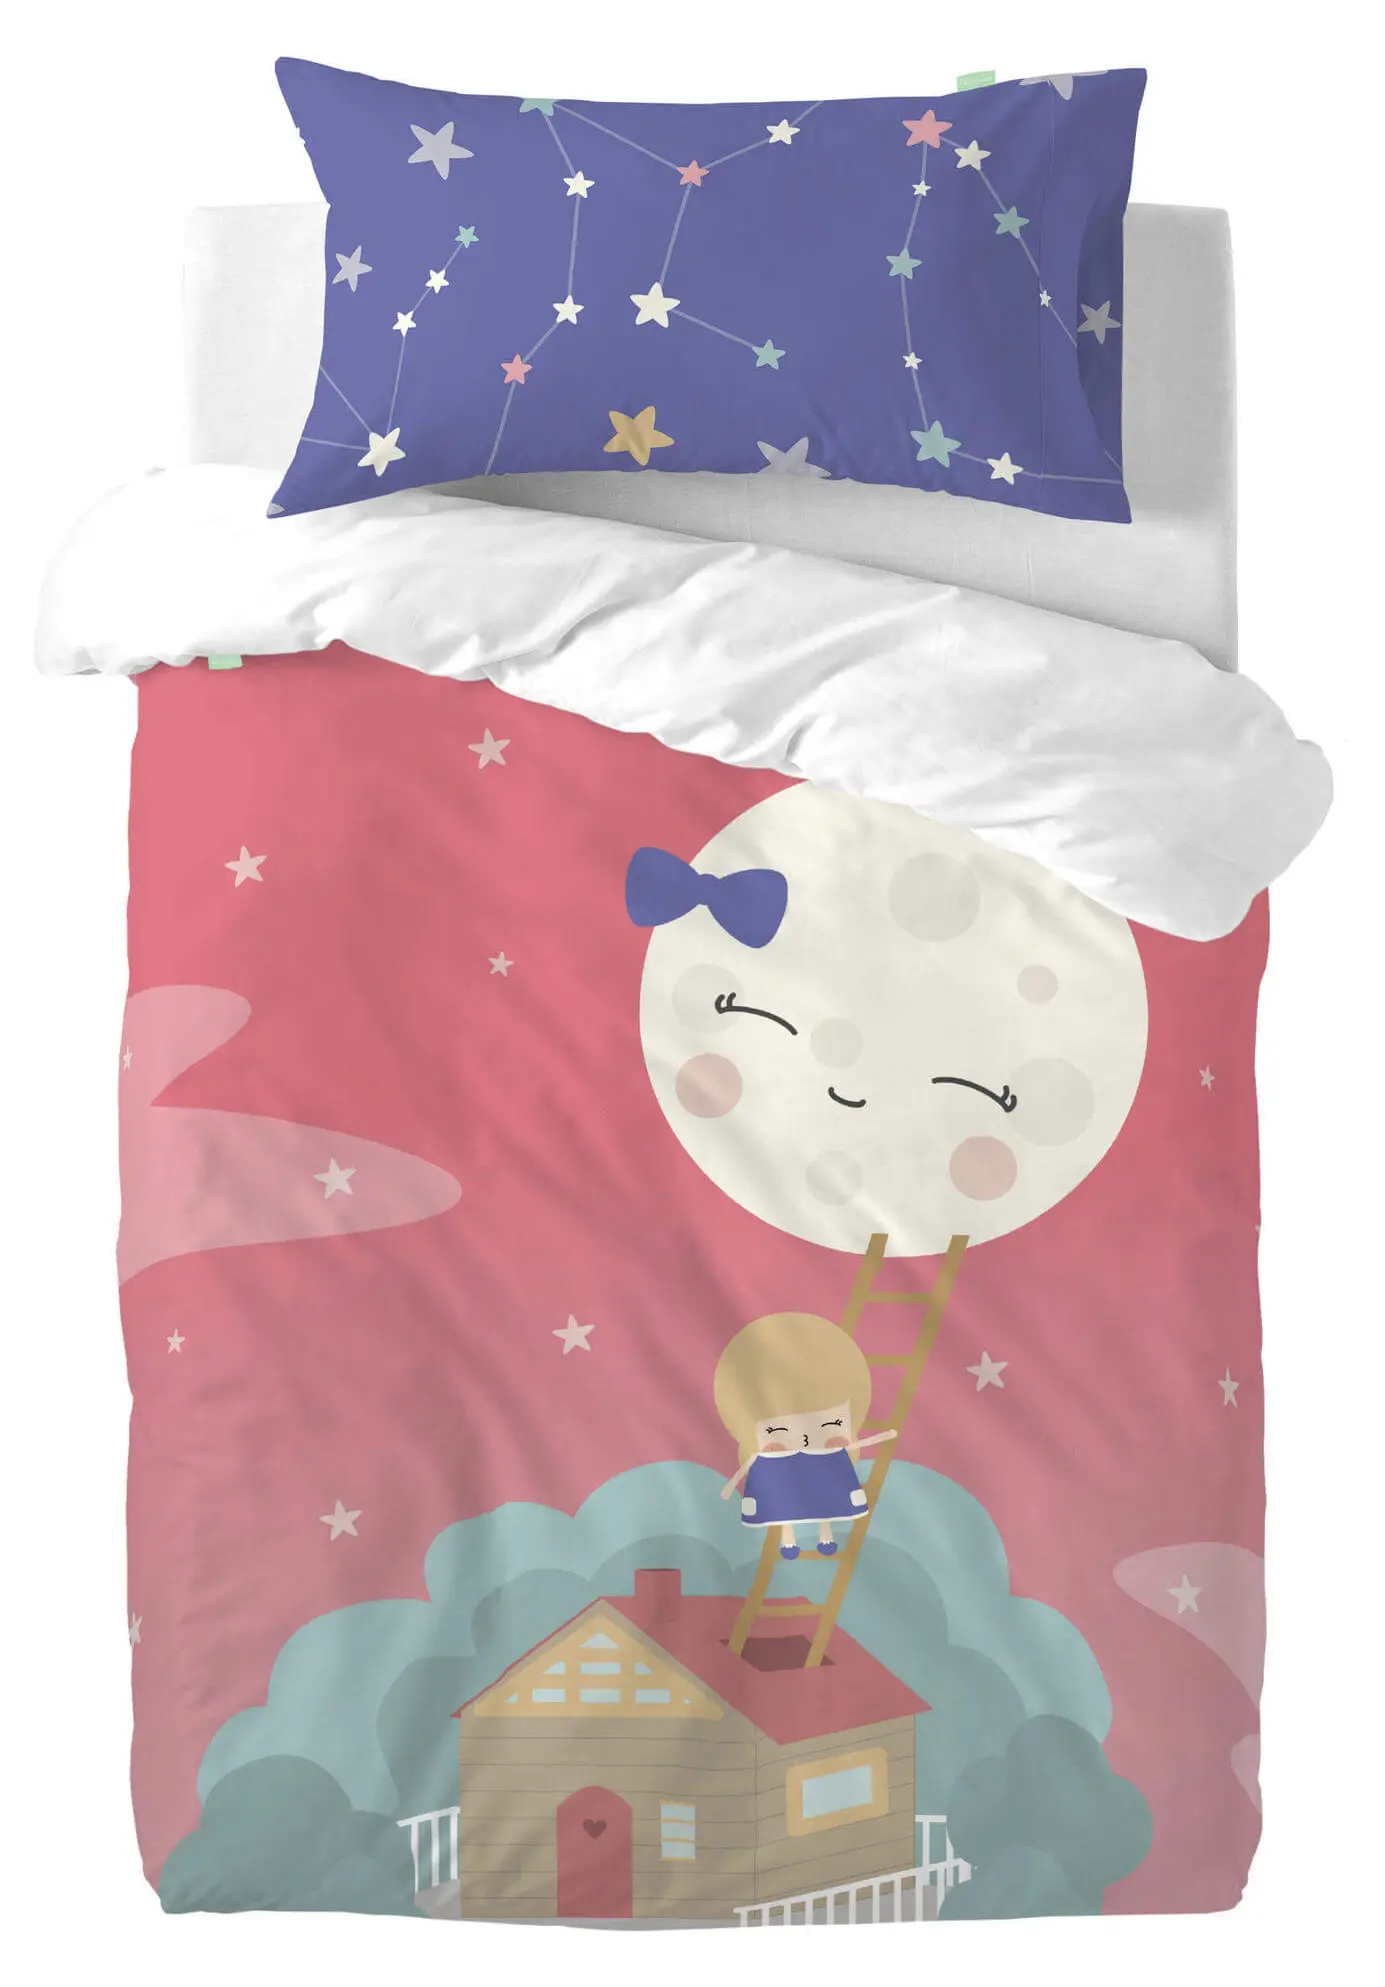 Bettbezug-set dream Moon